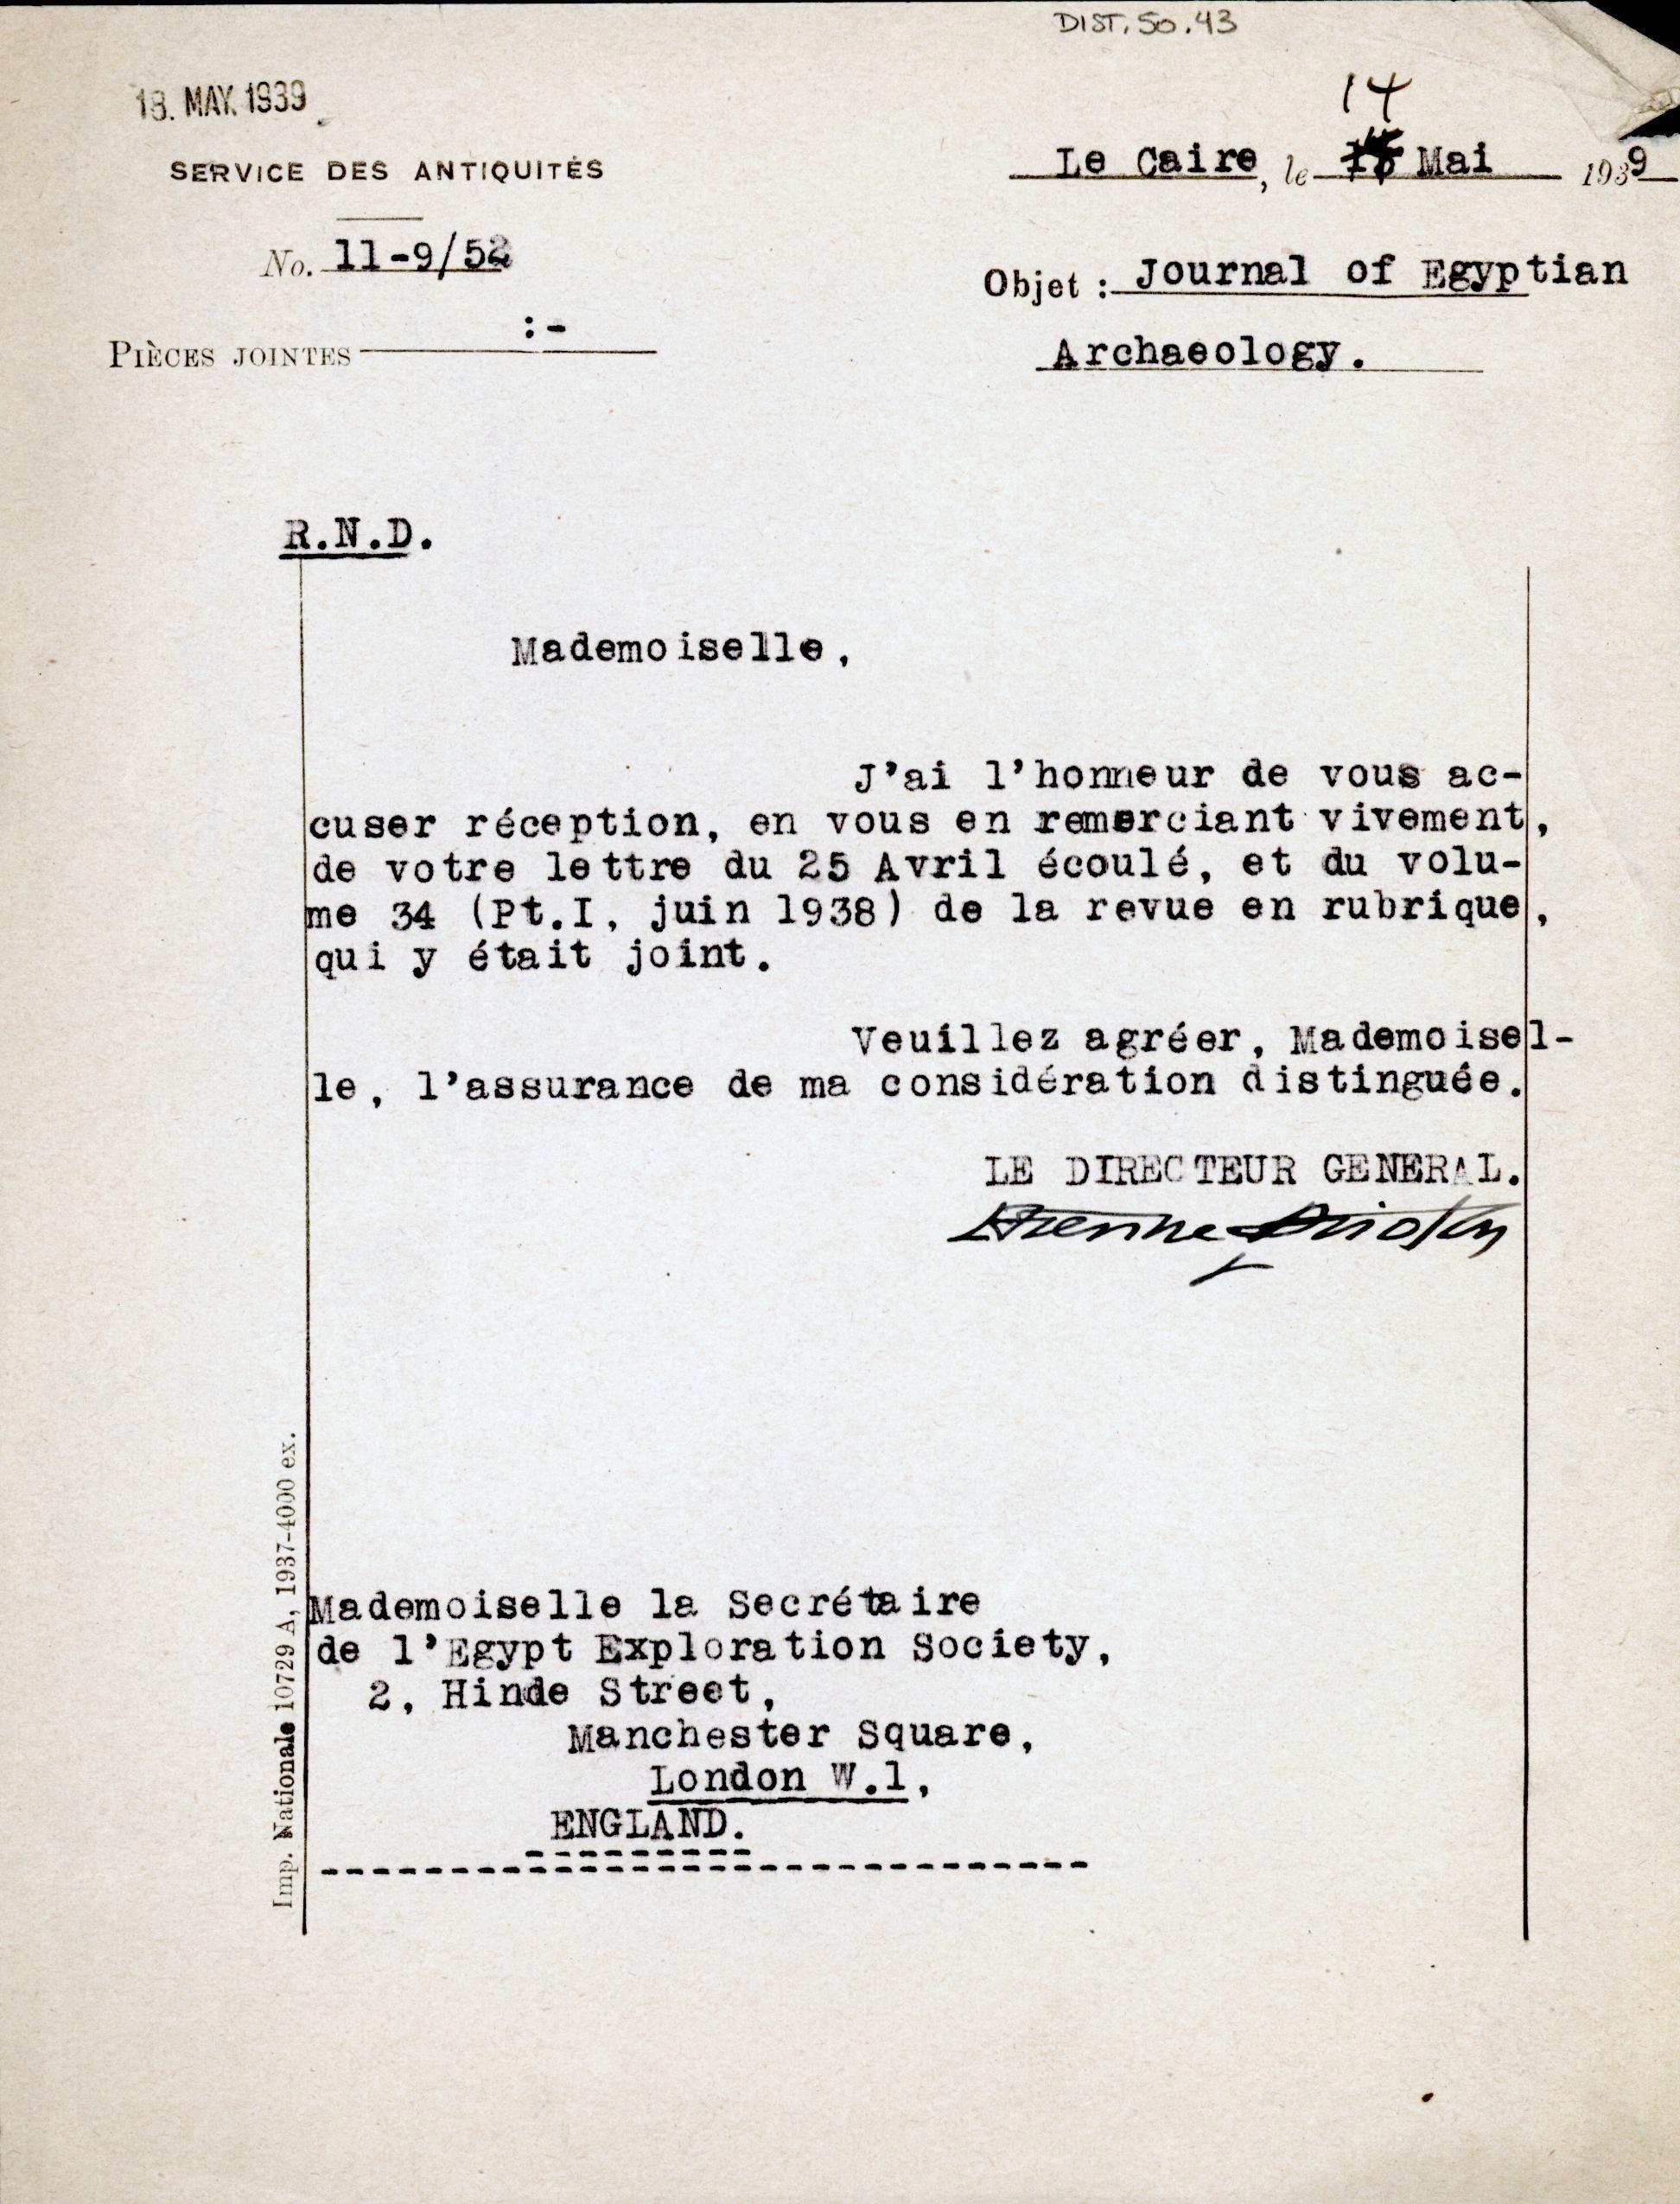 1926-39 correspondence with Antiquities Service DIST.50.43